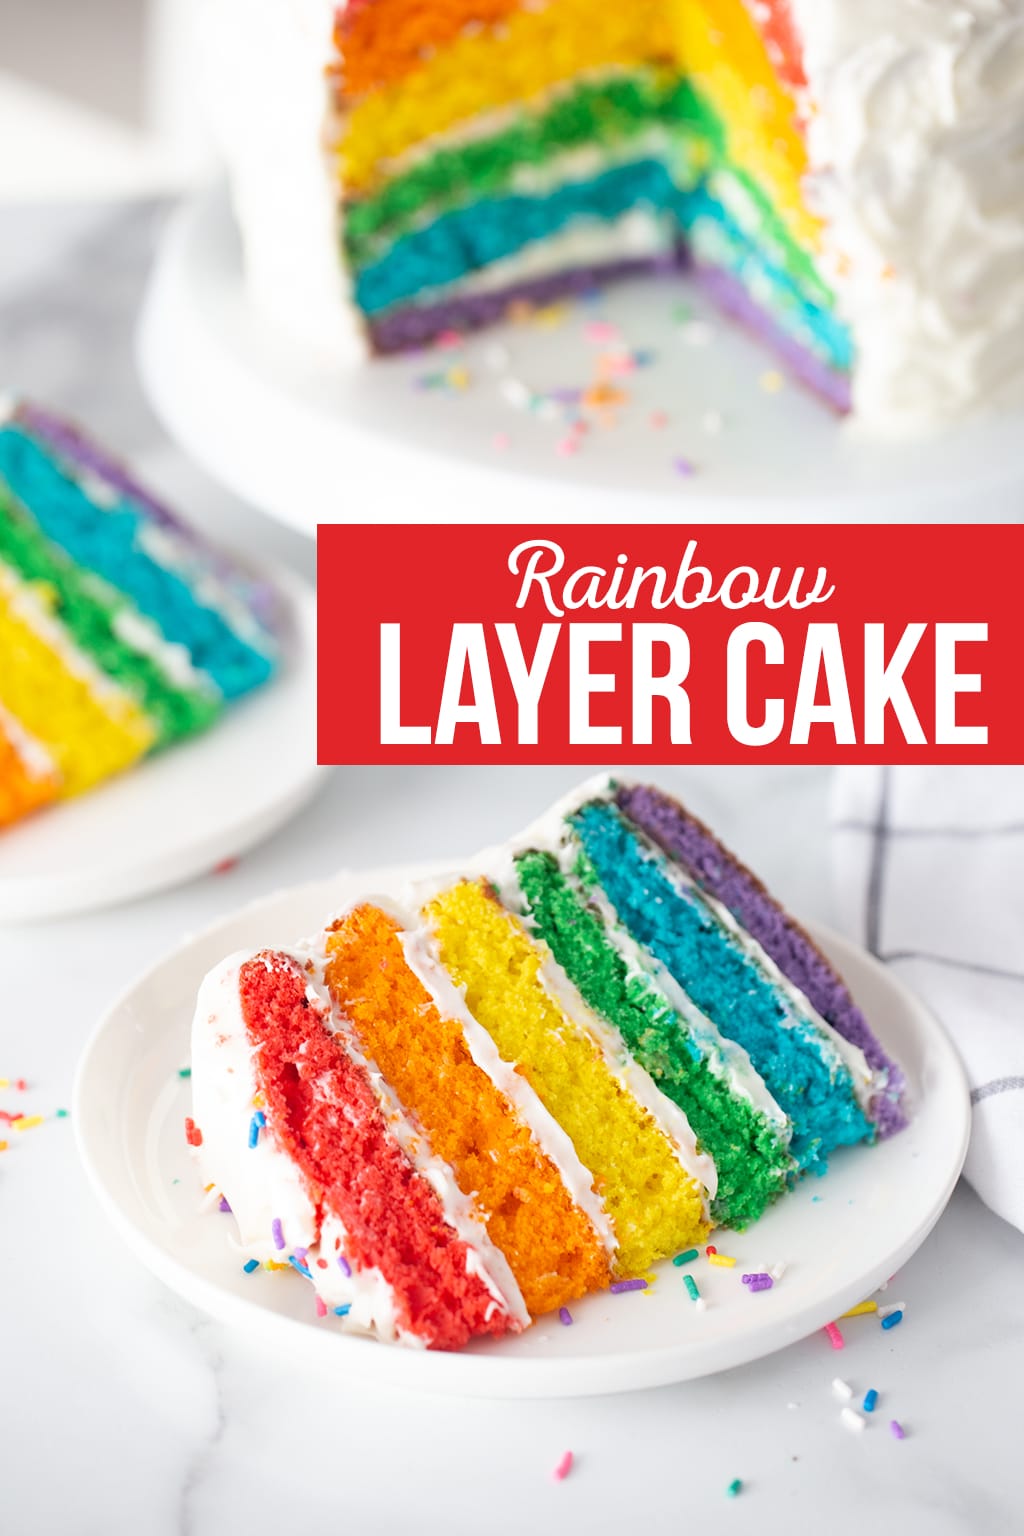 Rainbow Surprise Cake - FunCakes